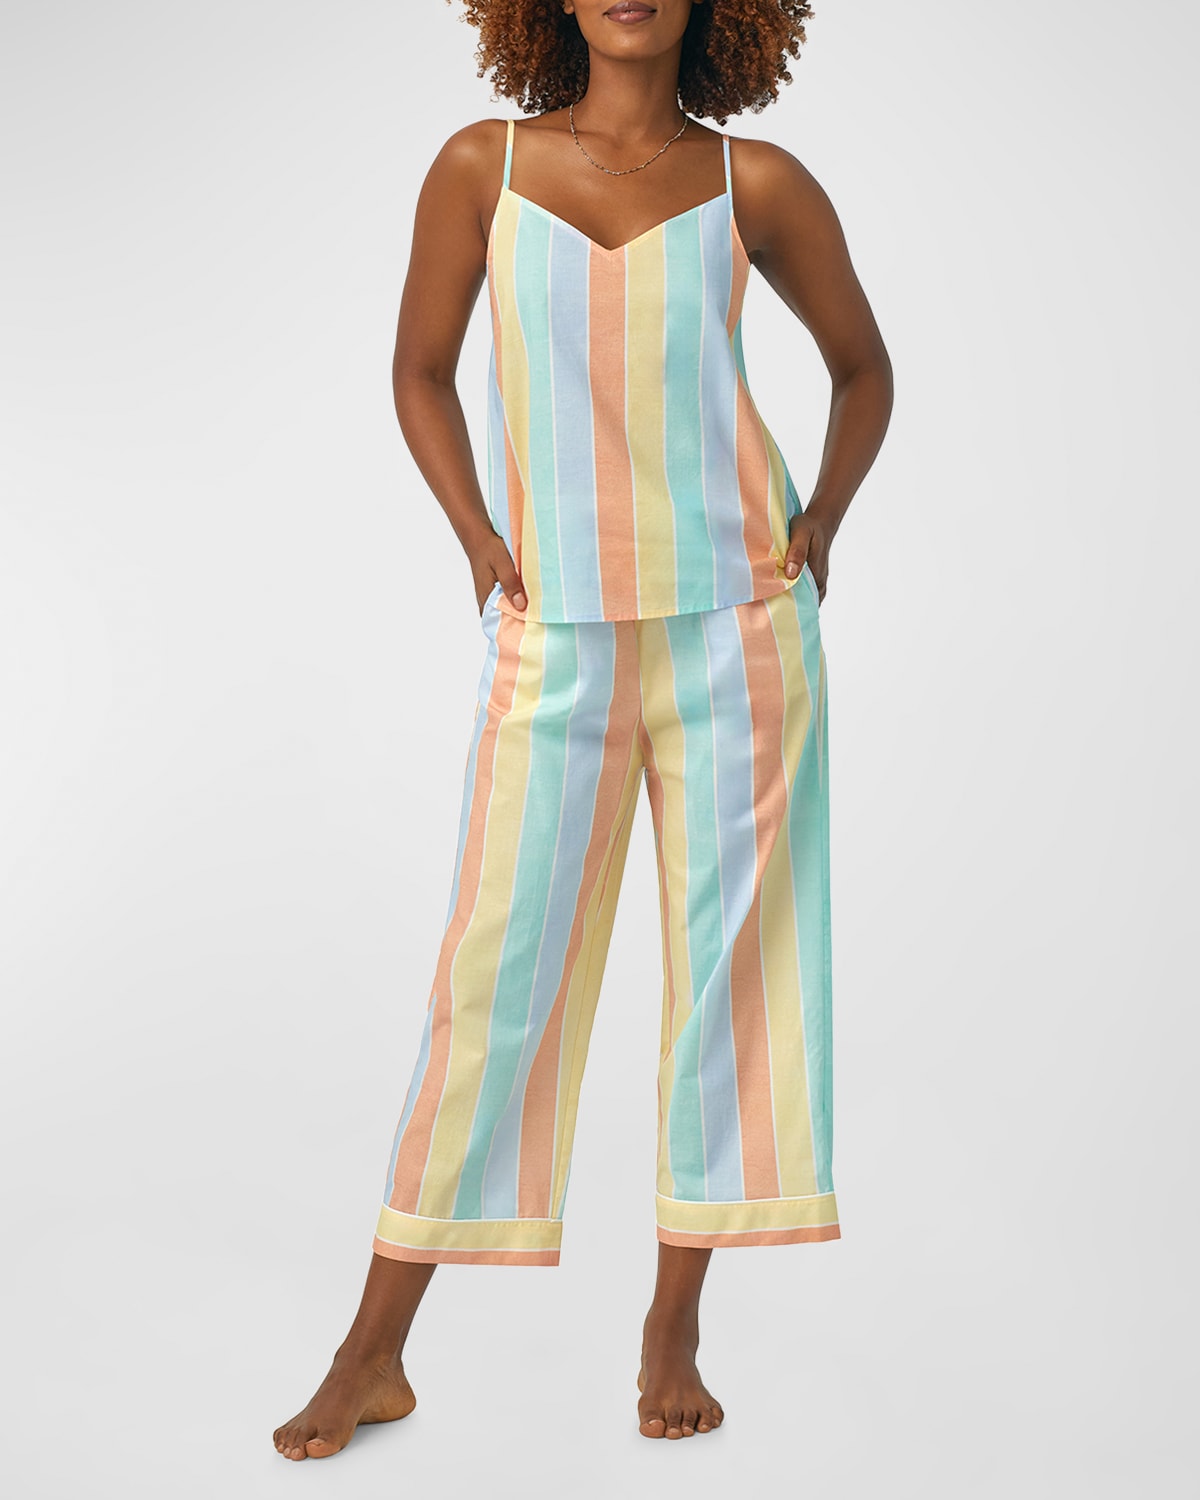 Striped Organic Cotton Poplin Pajama Set